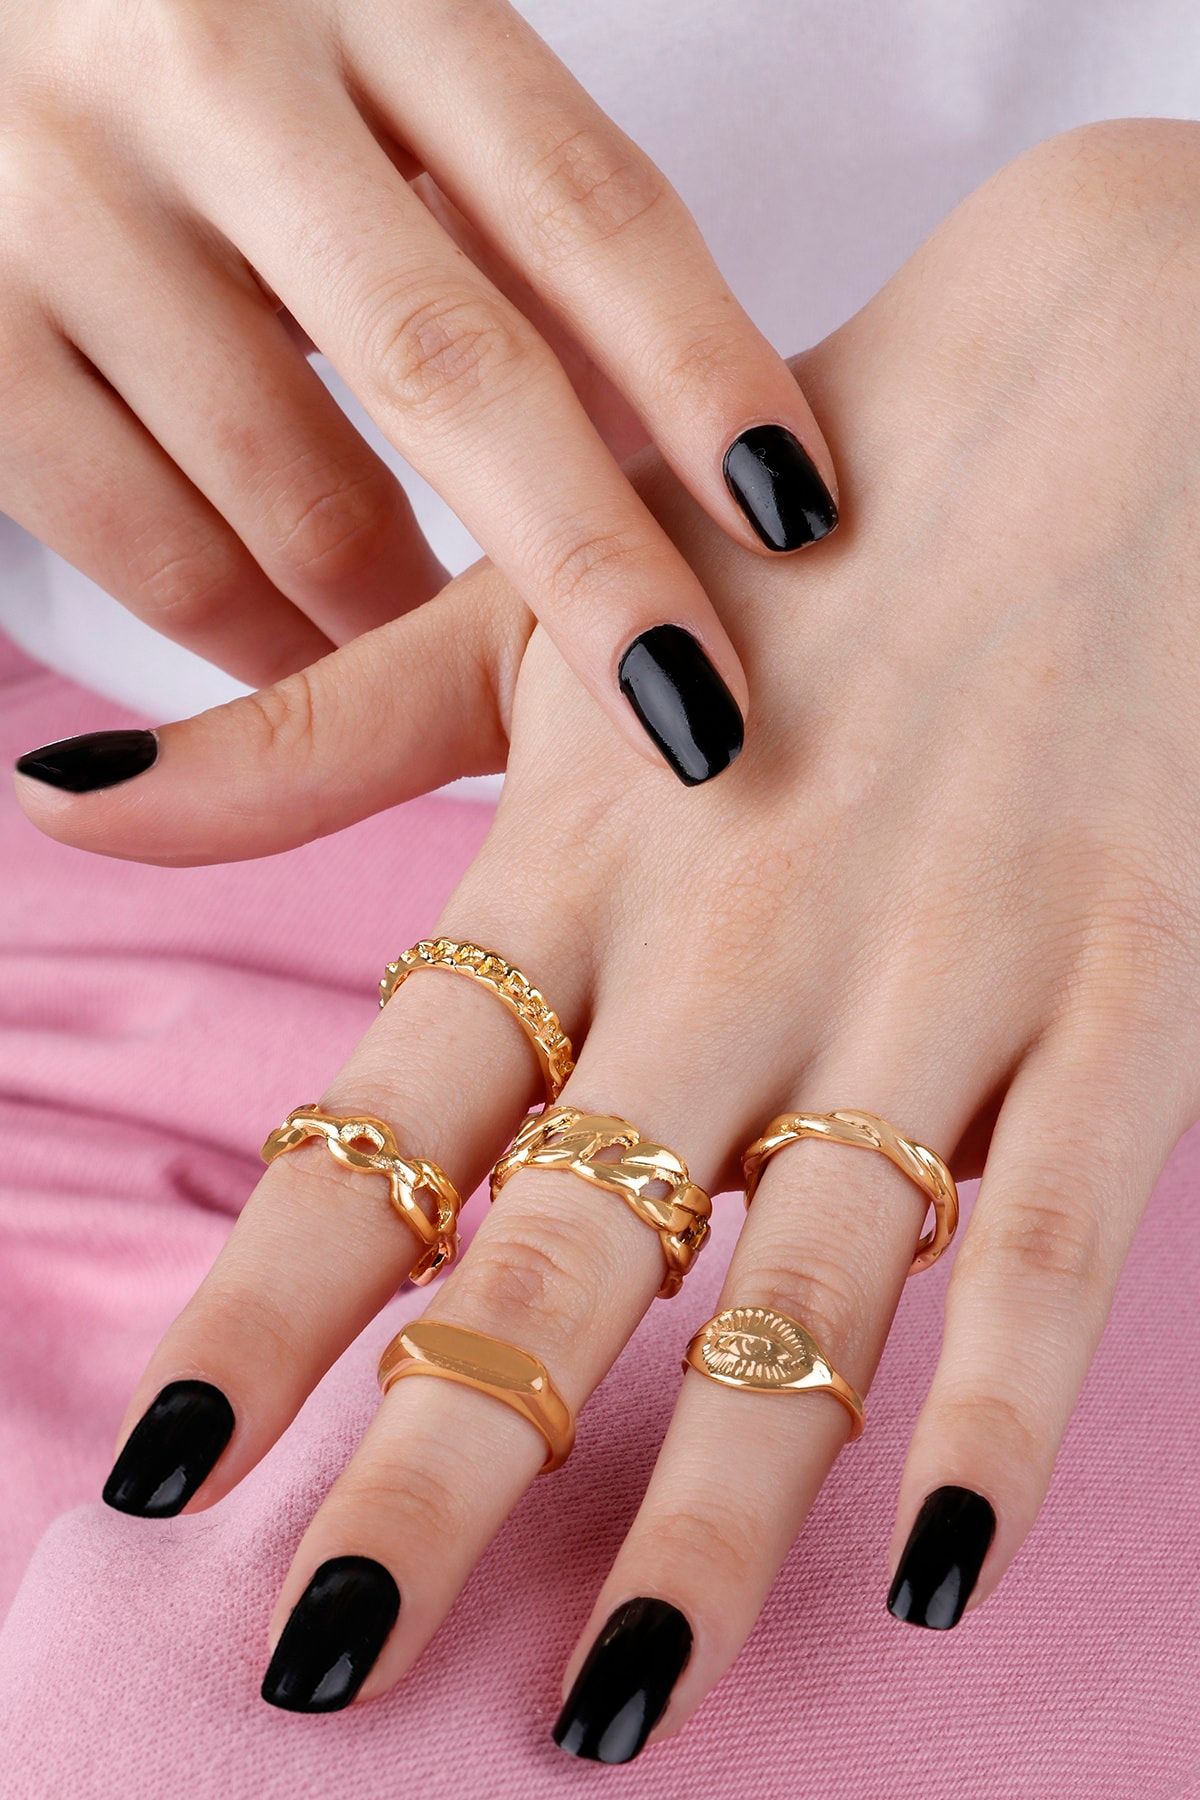 New Women Gold Metal 4 Fingers Rings Set Fashion Jewelry BOSS Charm Sized  Bands | eBay